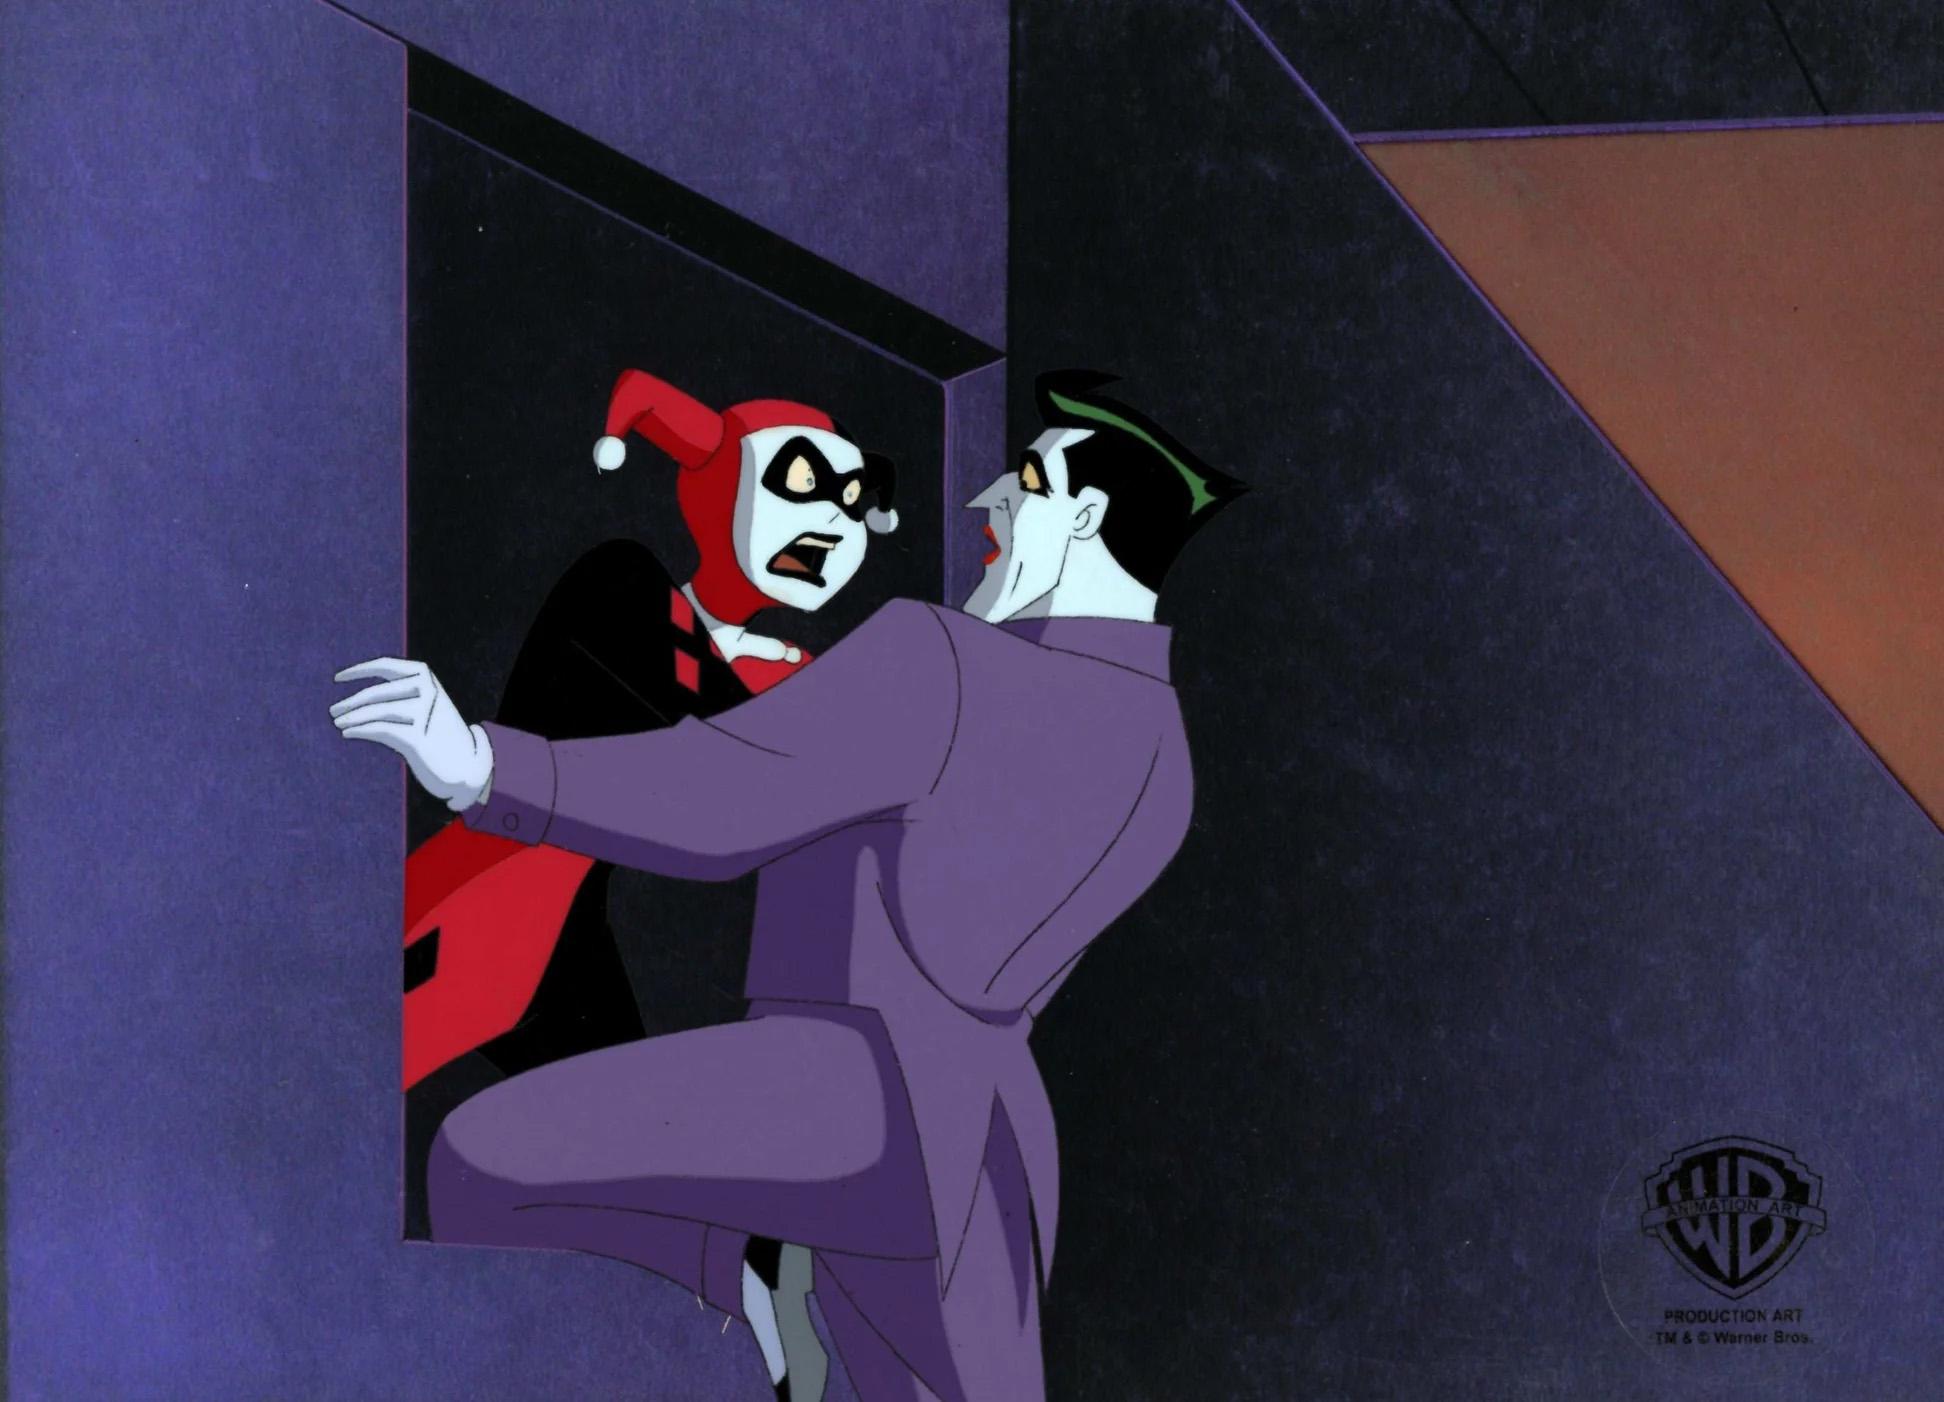 Batman The Animated Series Original Production Cel: Harley Quinn and Joker - Art by DC Comics Studio Artists